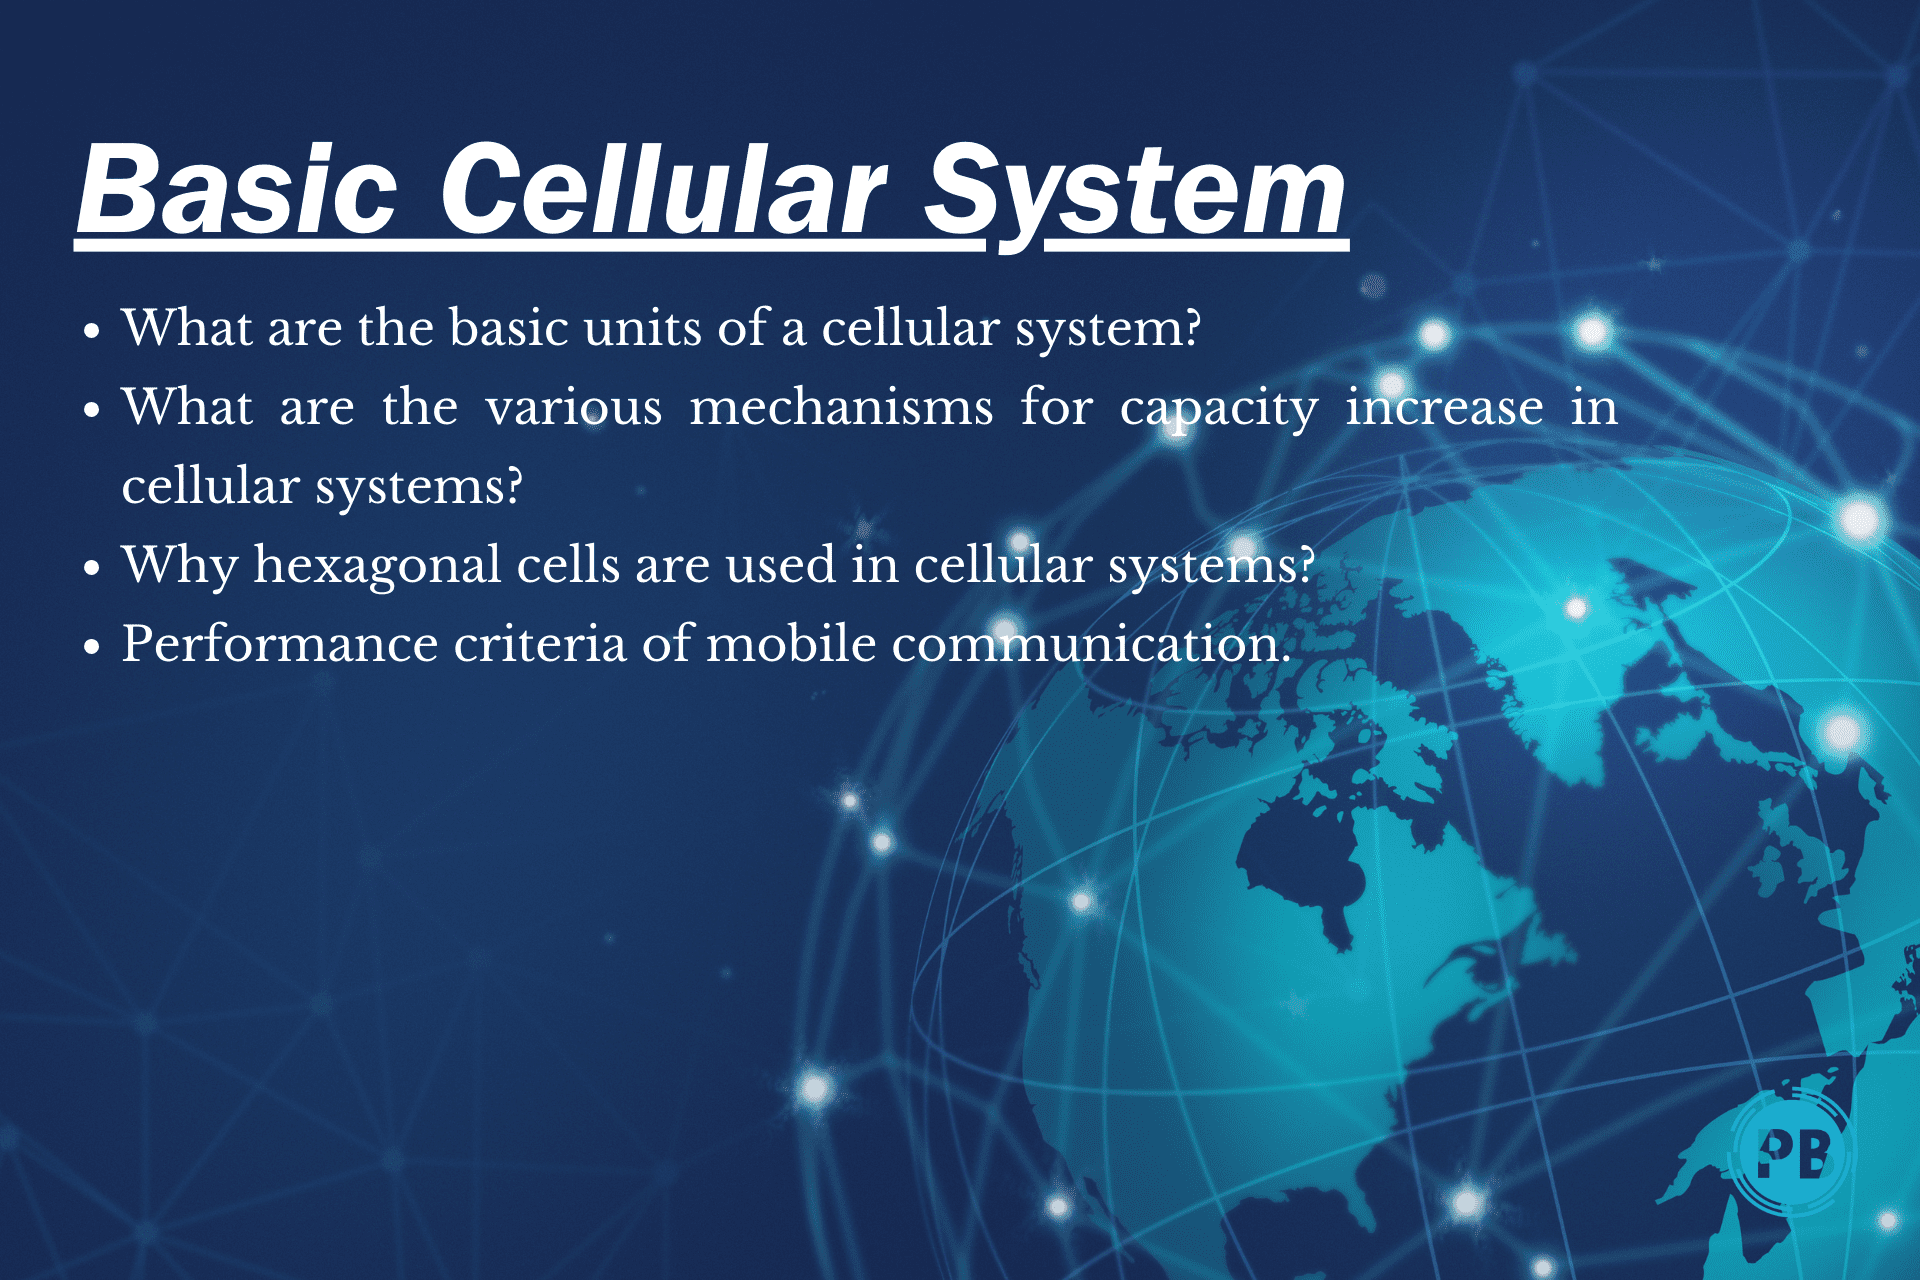 Basic Cellular System in Cellular and Mobile Communication details